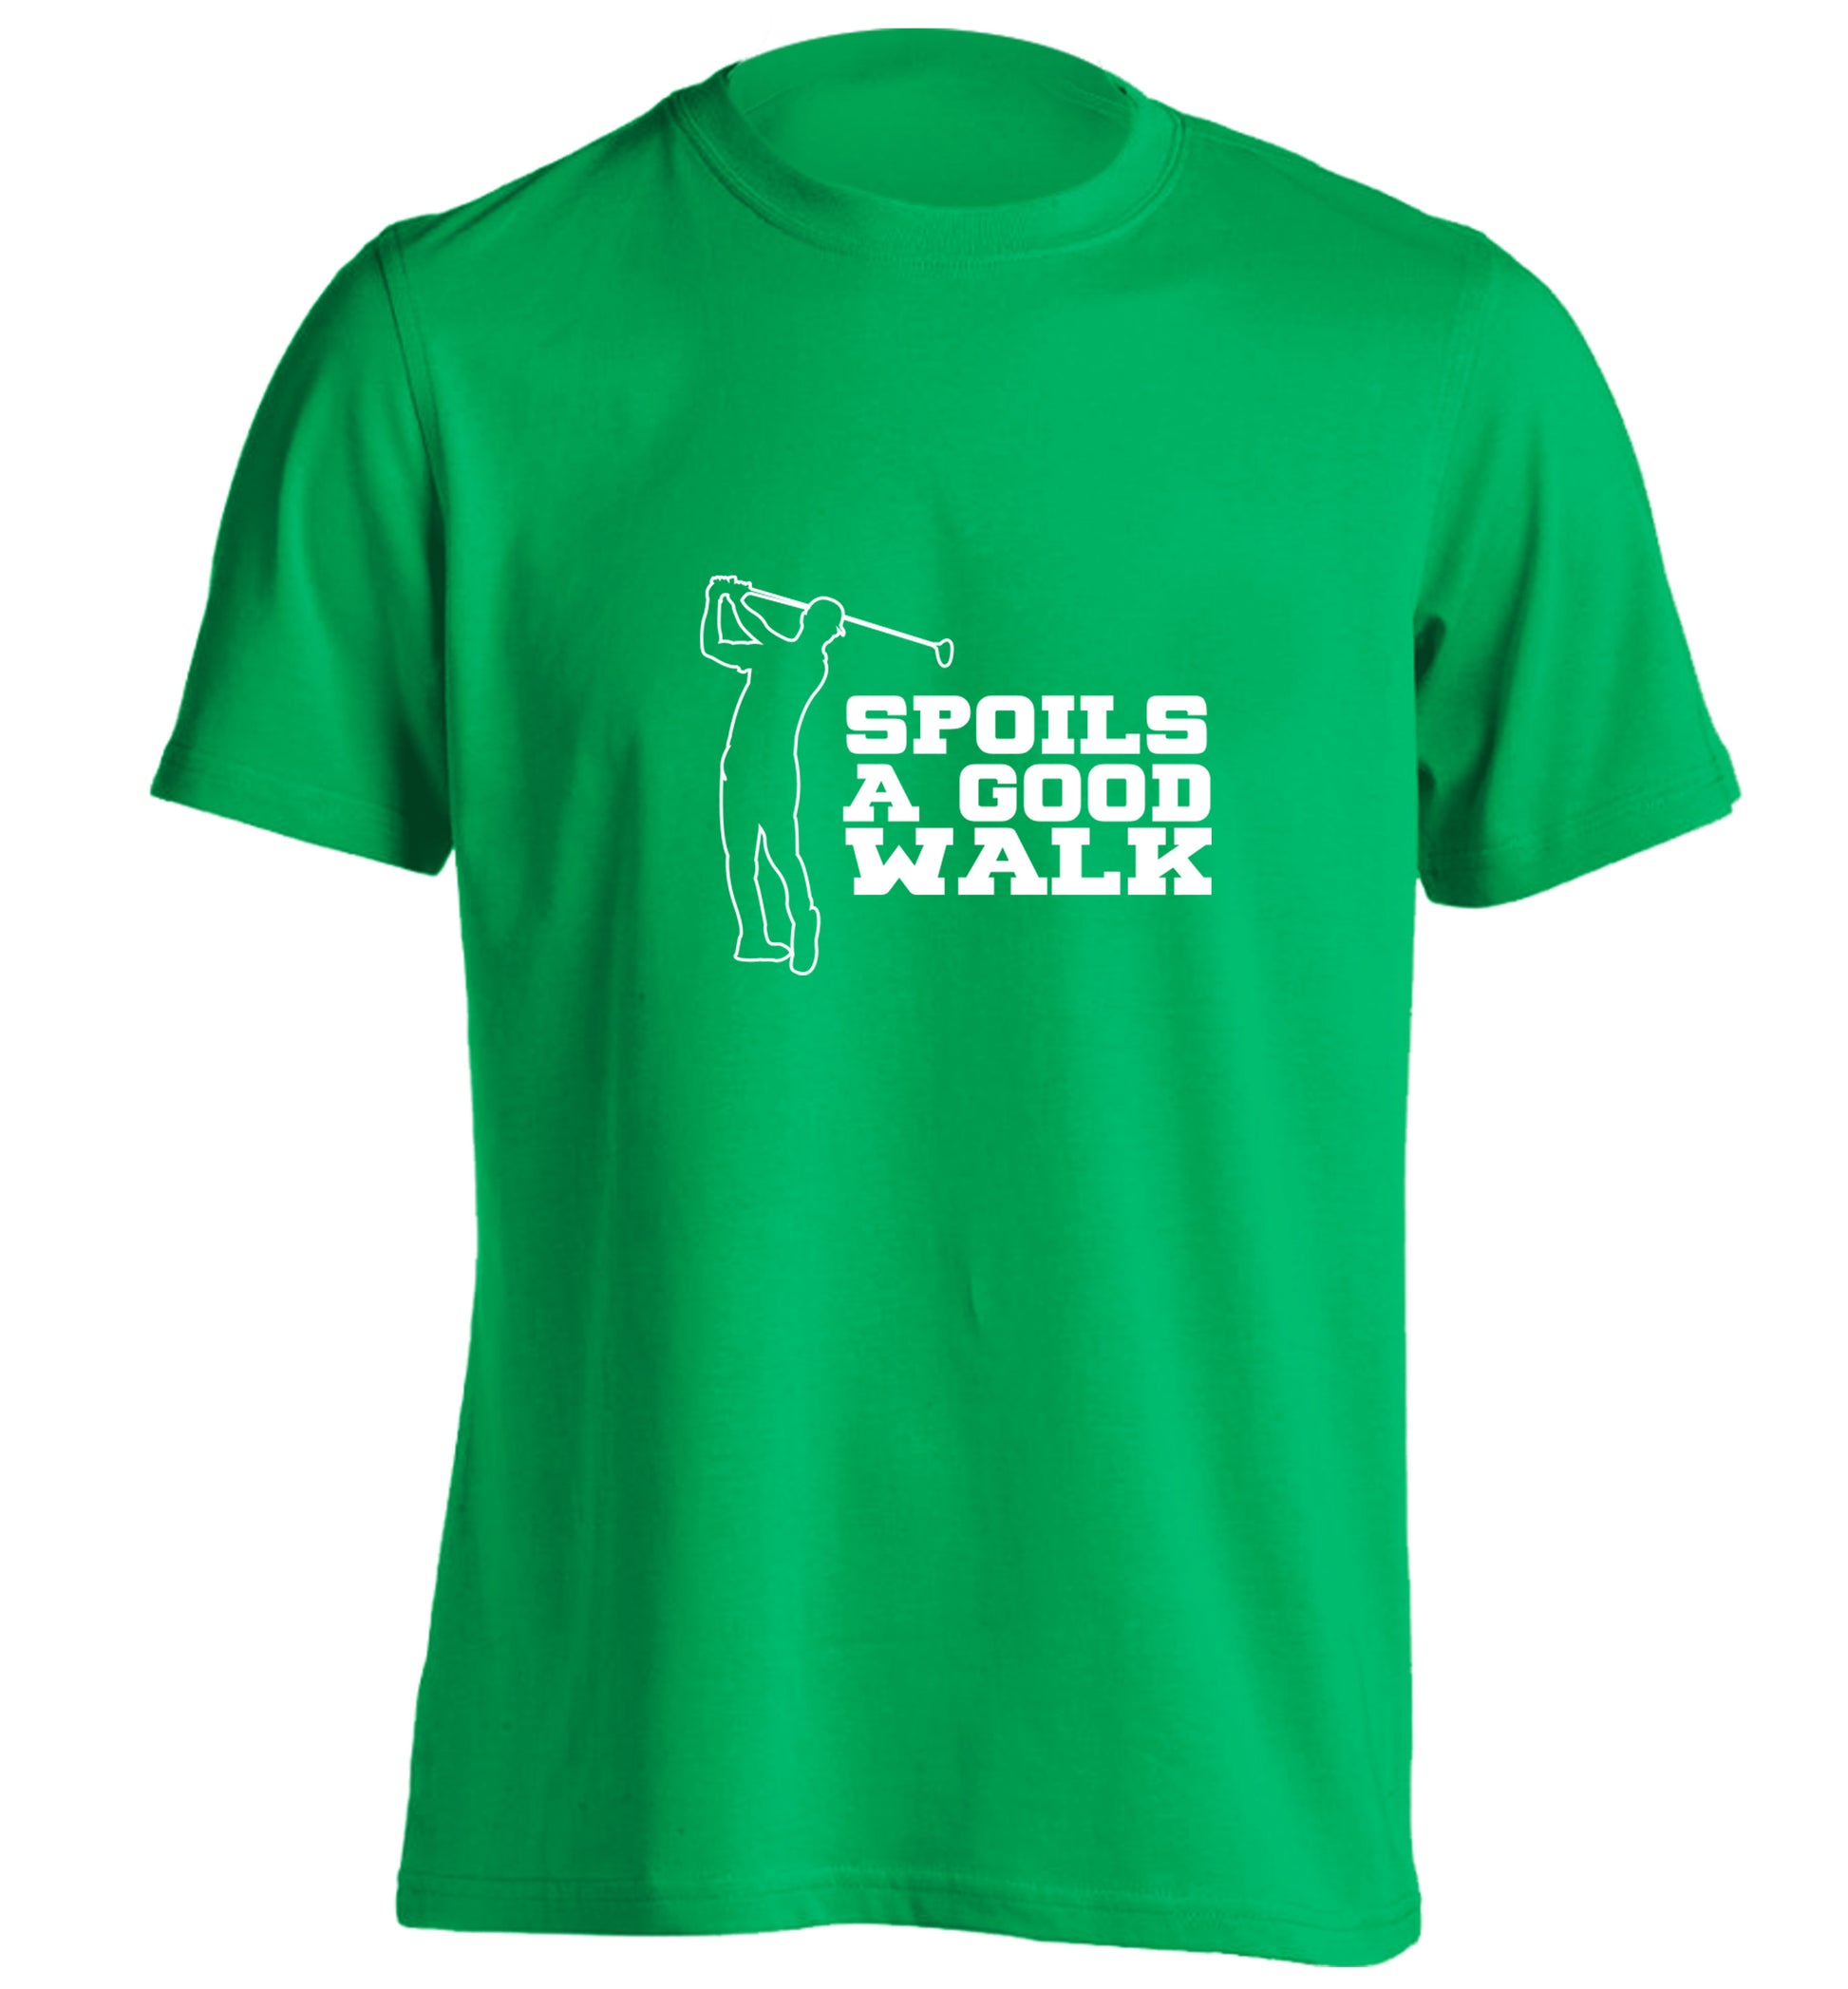 Golf spoils a good walk adults unisex green Tshirt 2XL